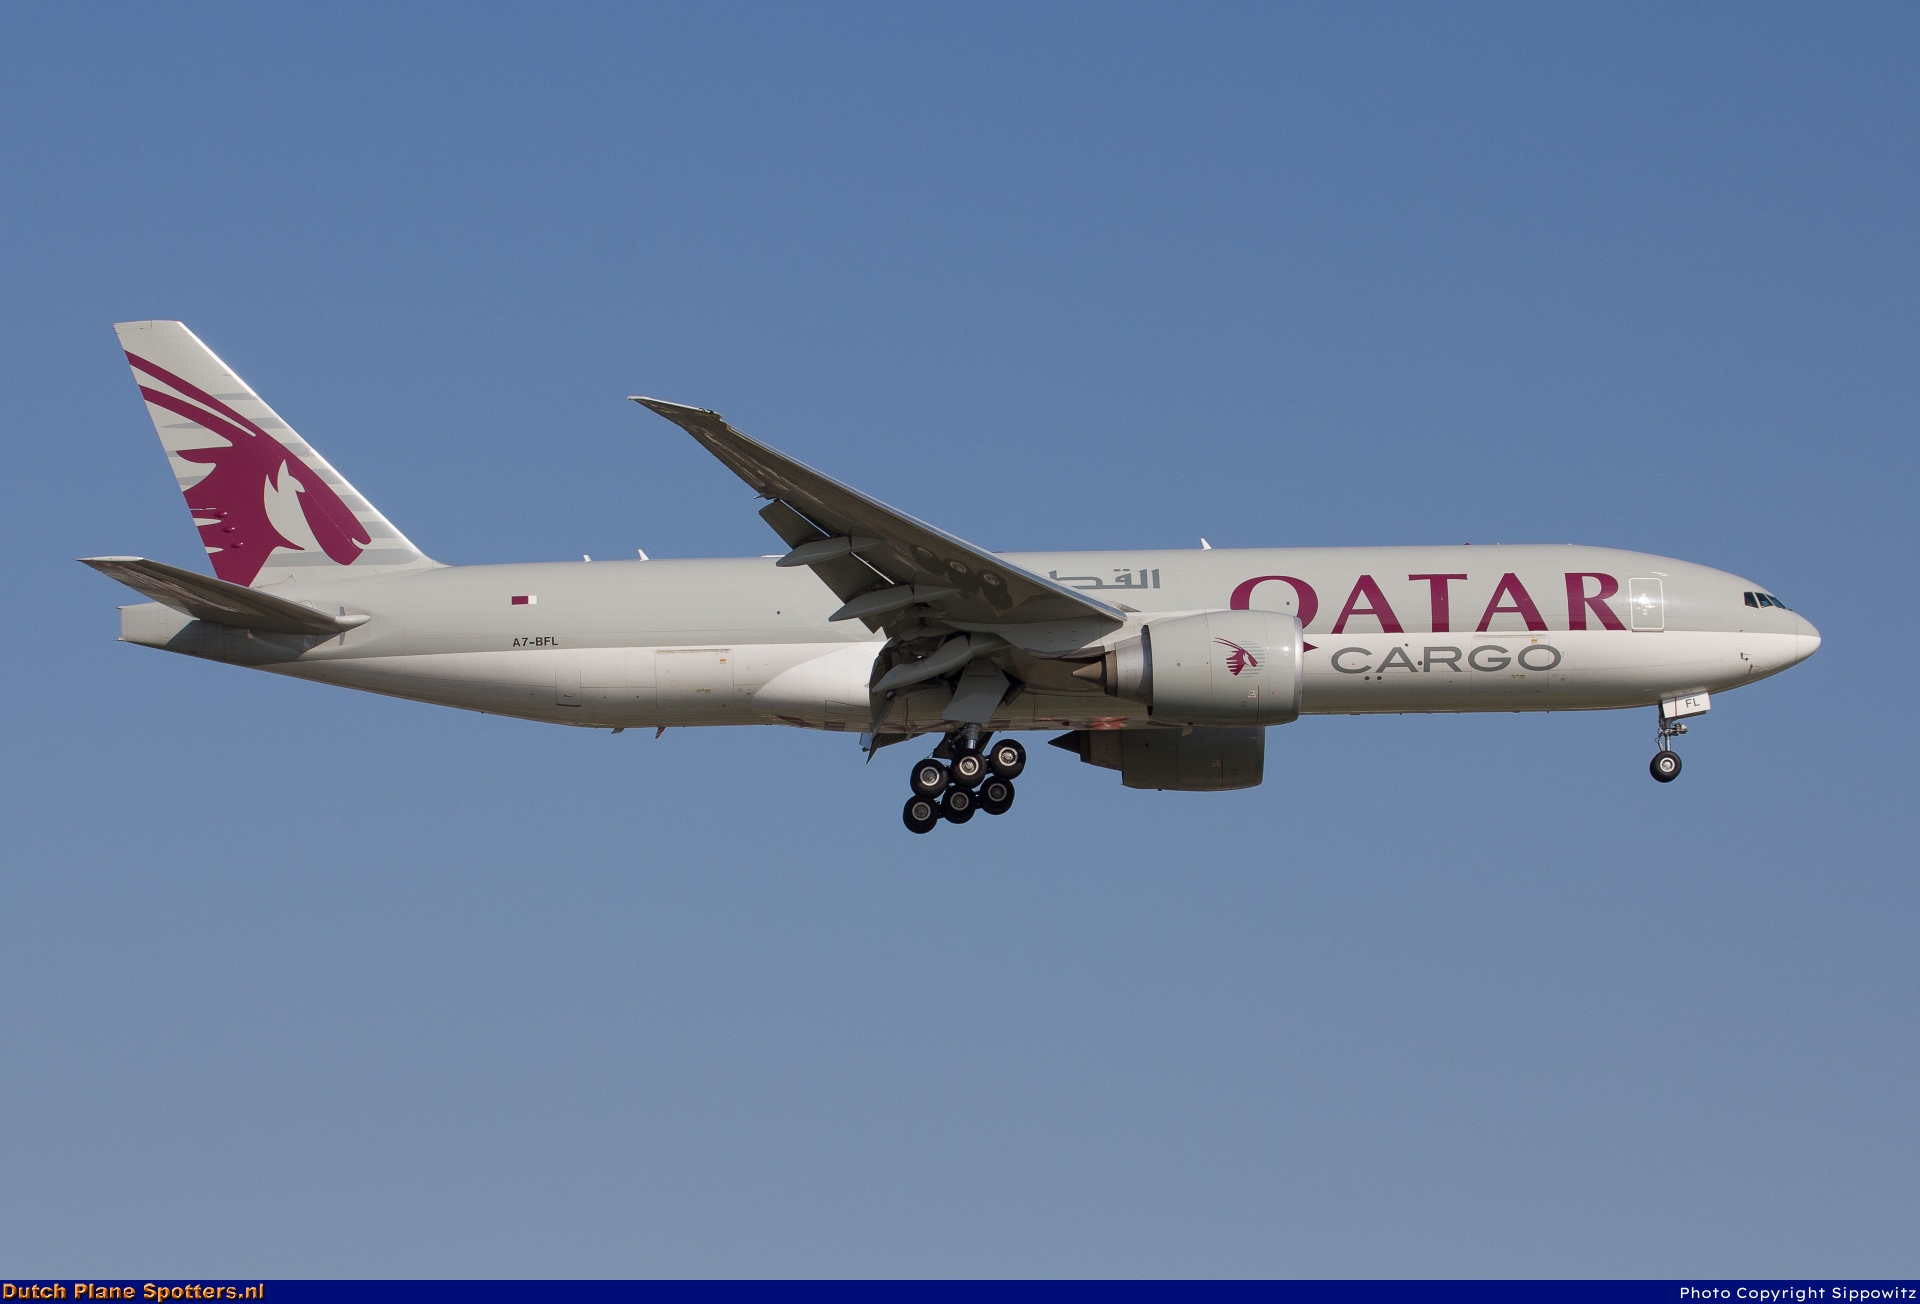 A7-BFL Boeing 777-F Qatar Airways Cargo by Sippowitz